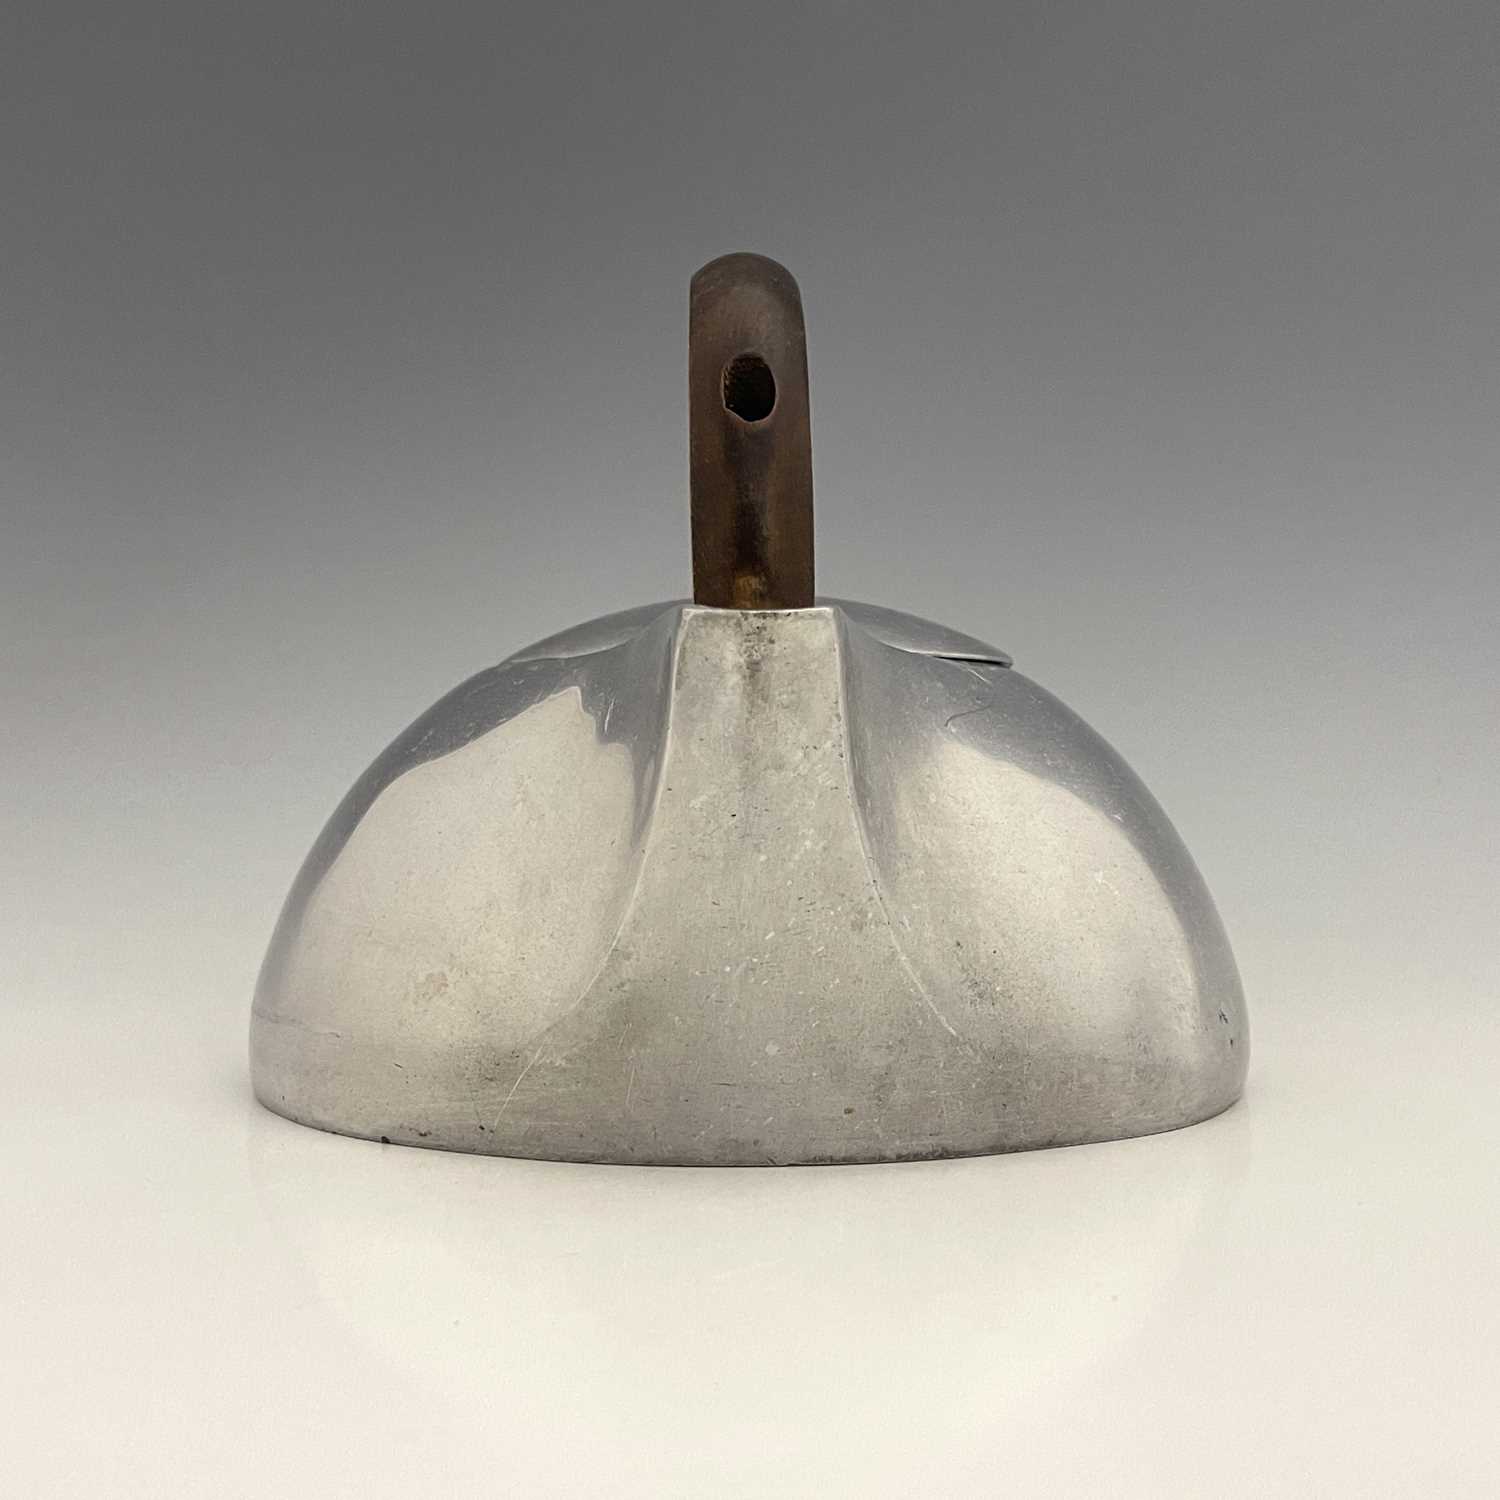 Jean Picquot after John Gordon Rideout, a Picquot Ware aluminium alloy K3 kettle, designed 1938, - Image 7 of 8